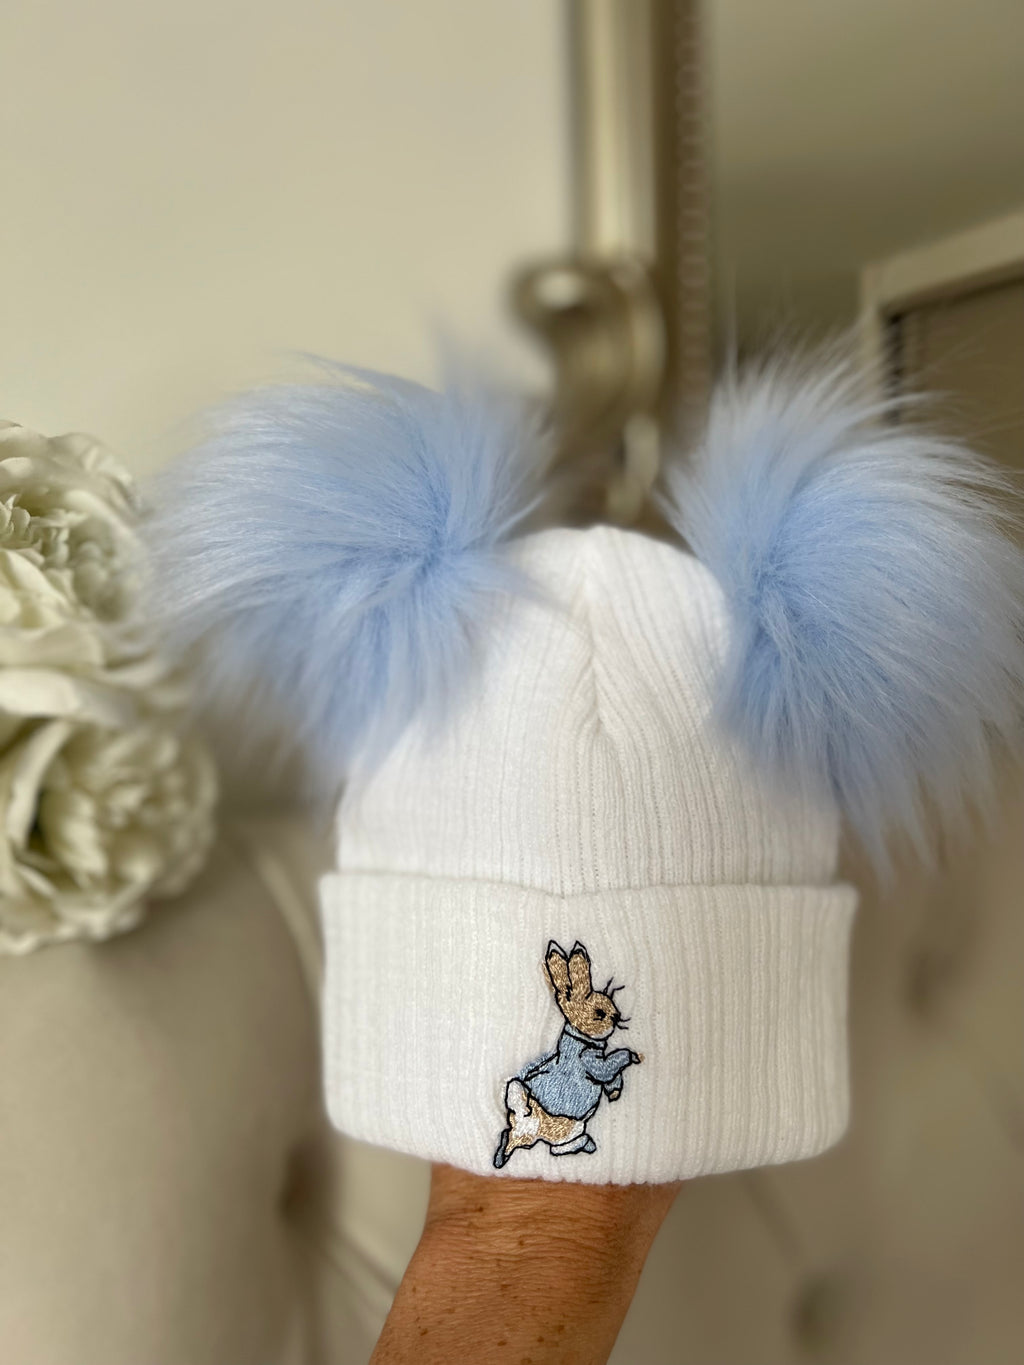 Blue & white peter rabbit hat